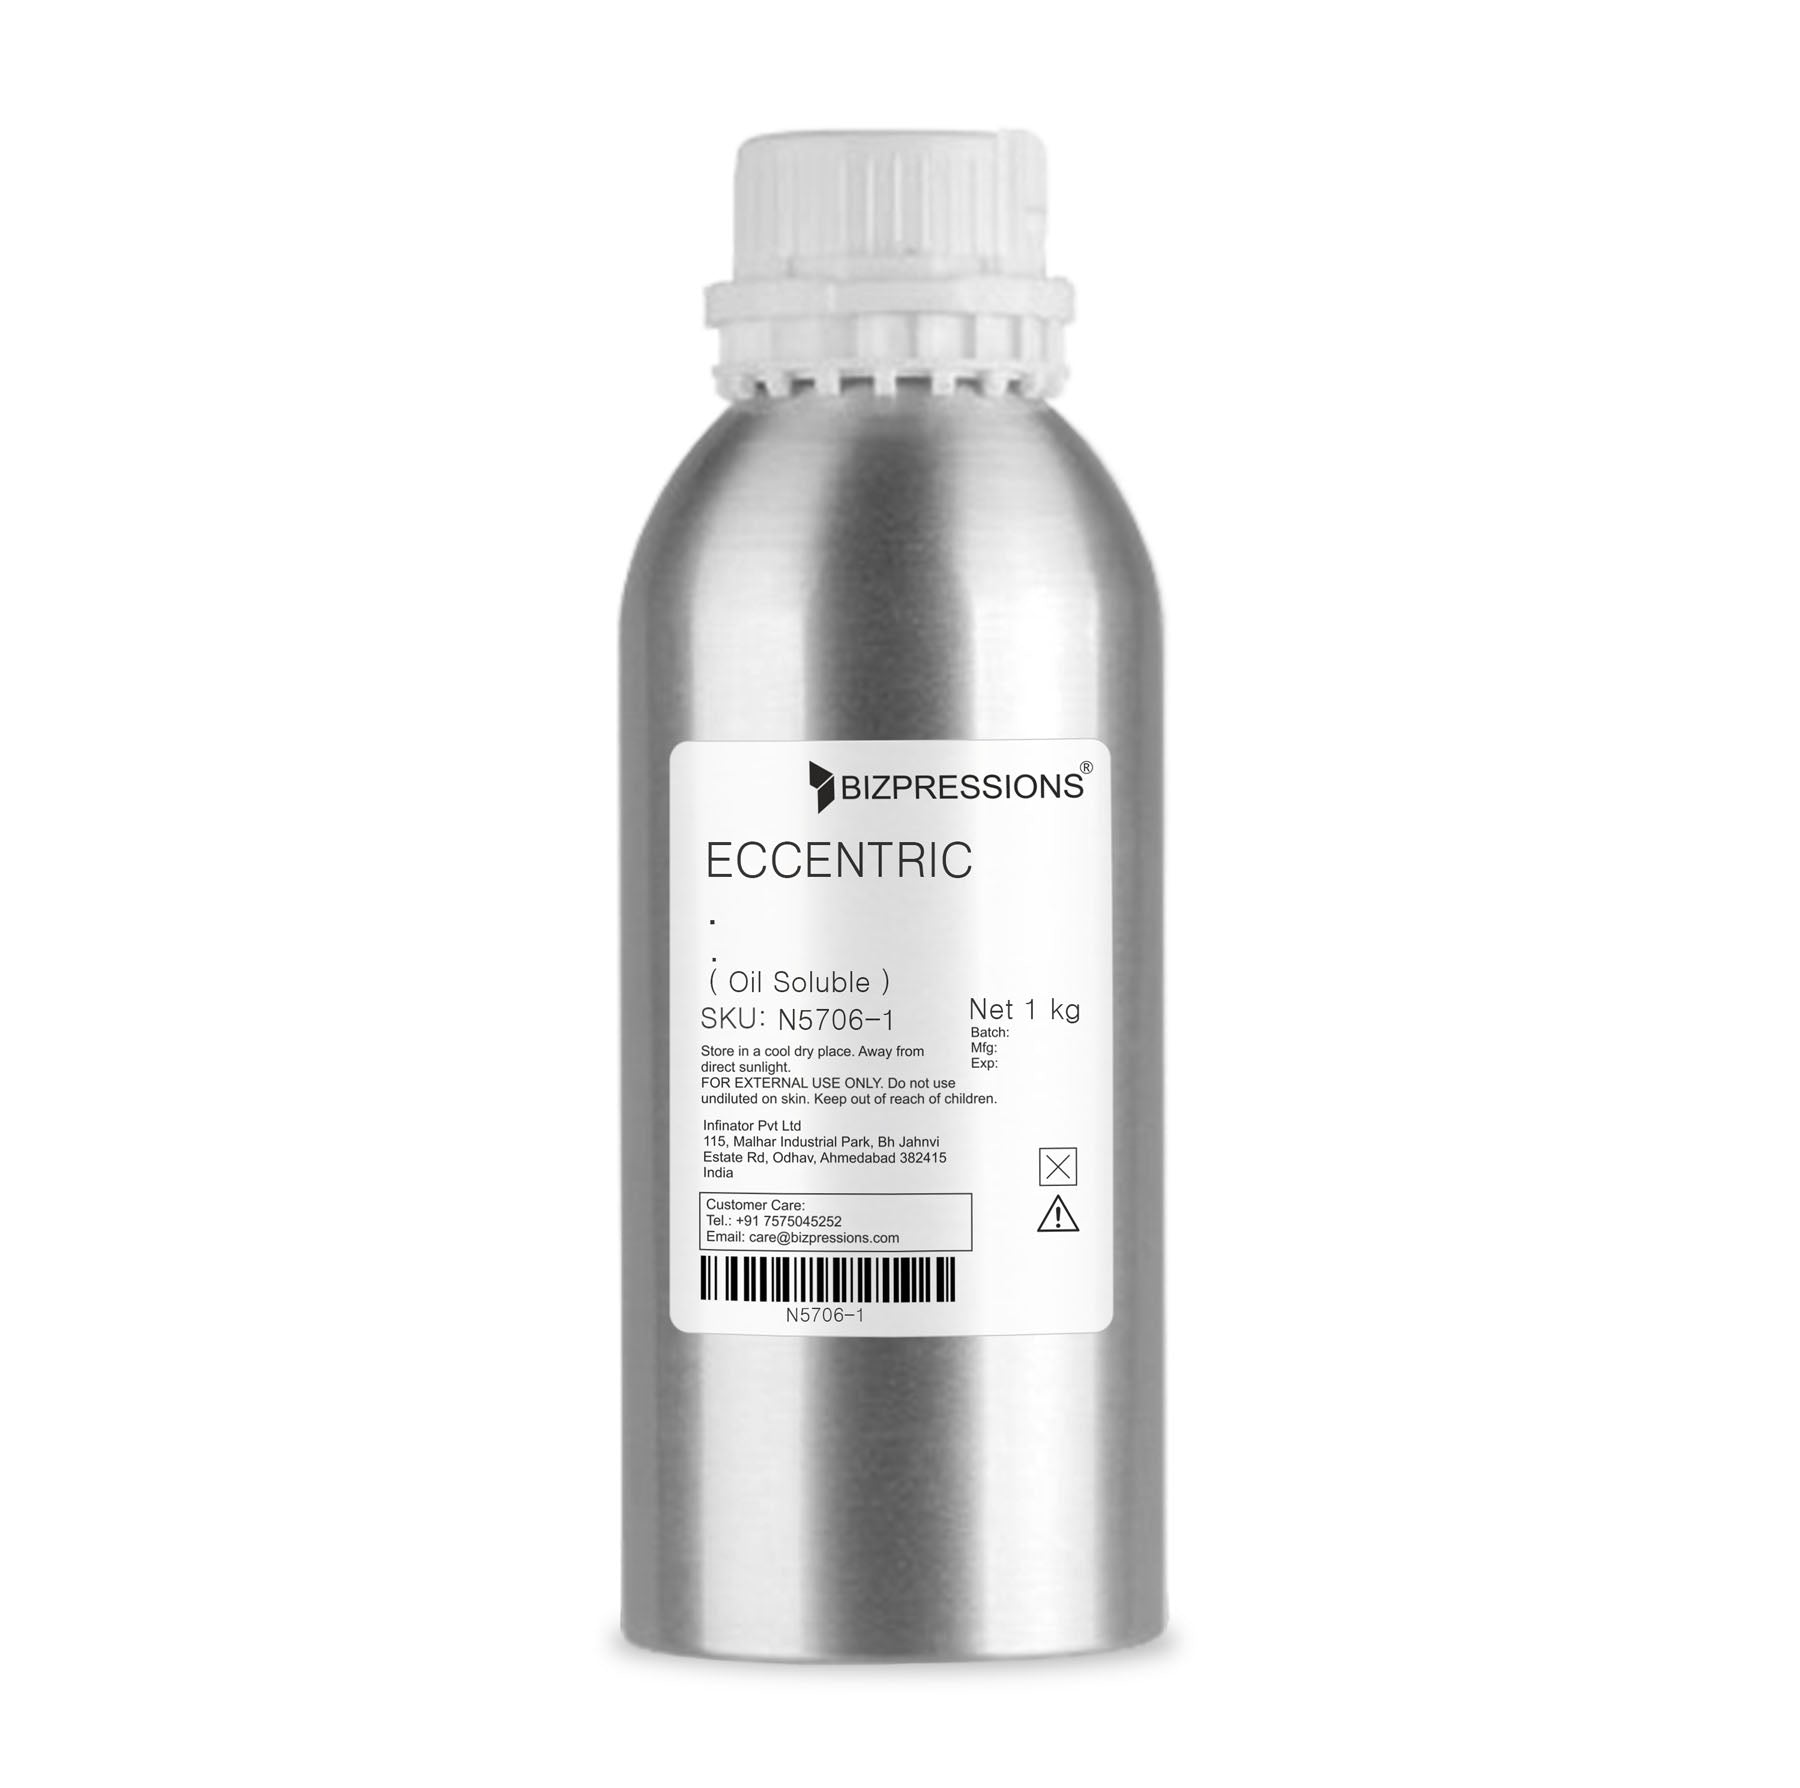 ECCENTRIC - Fragrance ( Oil Soluble ) - 1 kg